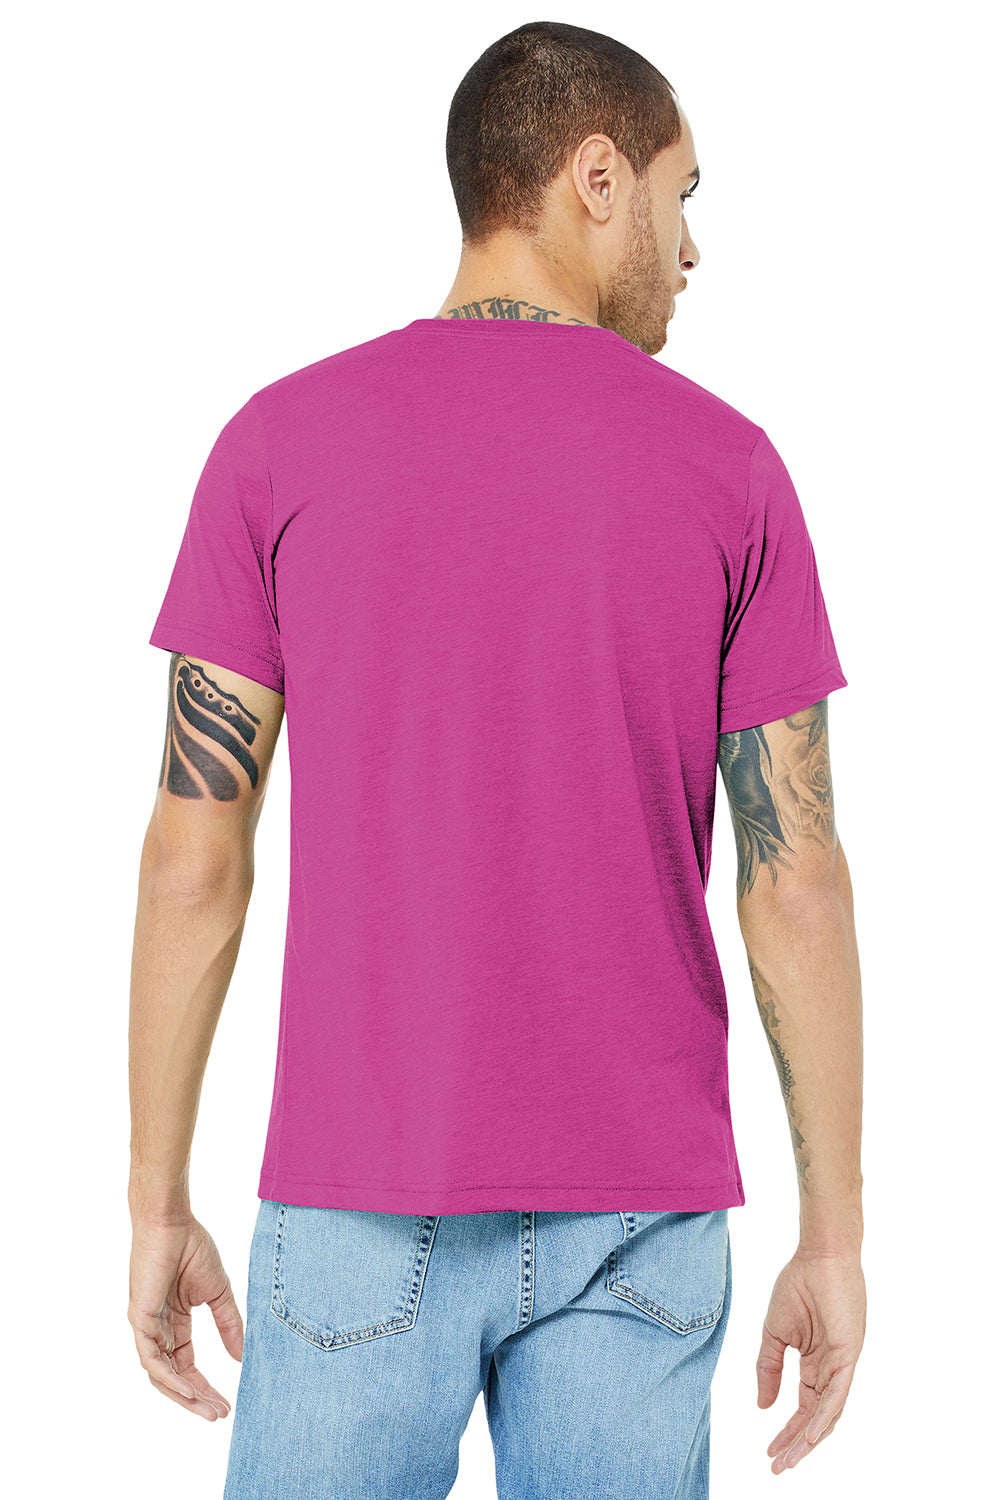 Bella + Canvas BC3413/3413C/3413 Mens Short Sleeve Crewneck T-Shirt Berry Pink Model Back